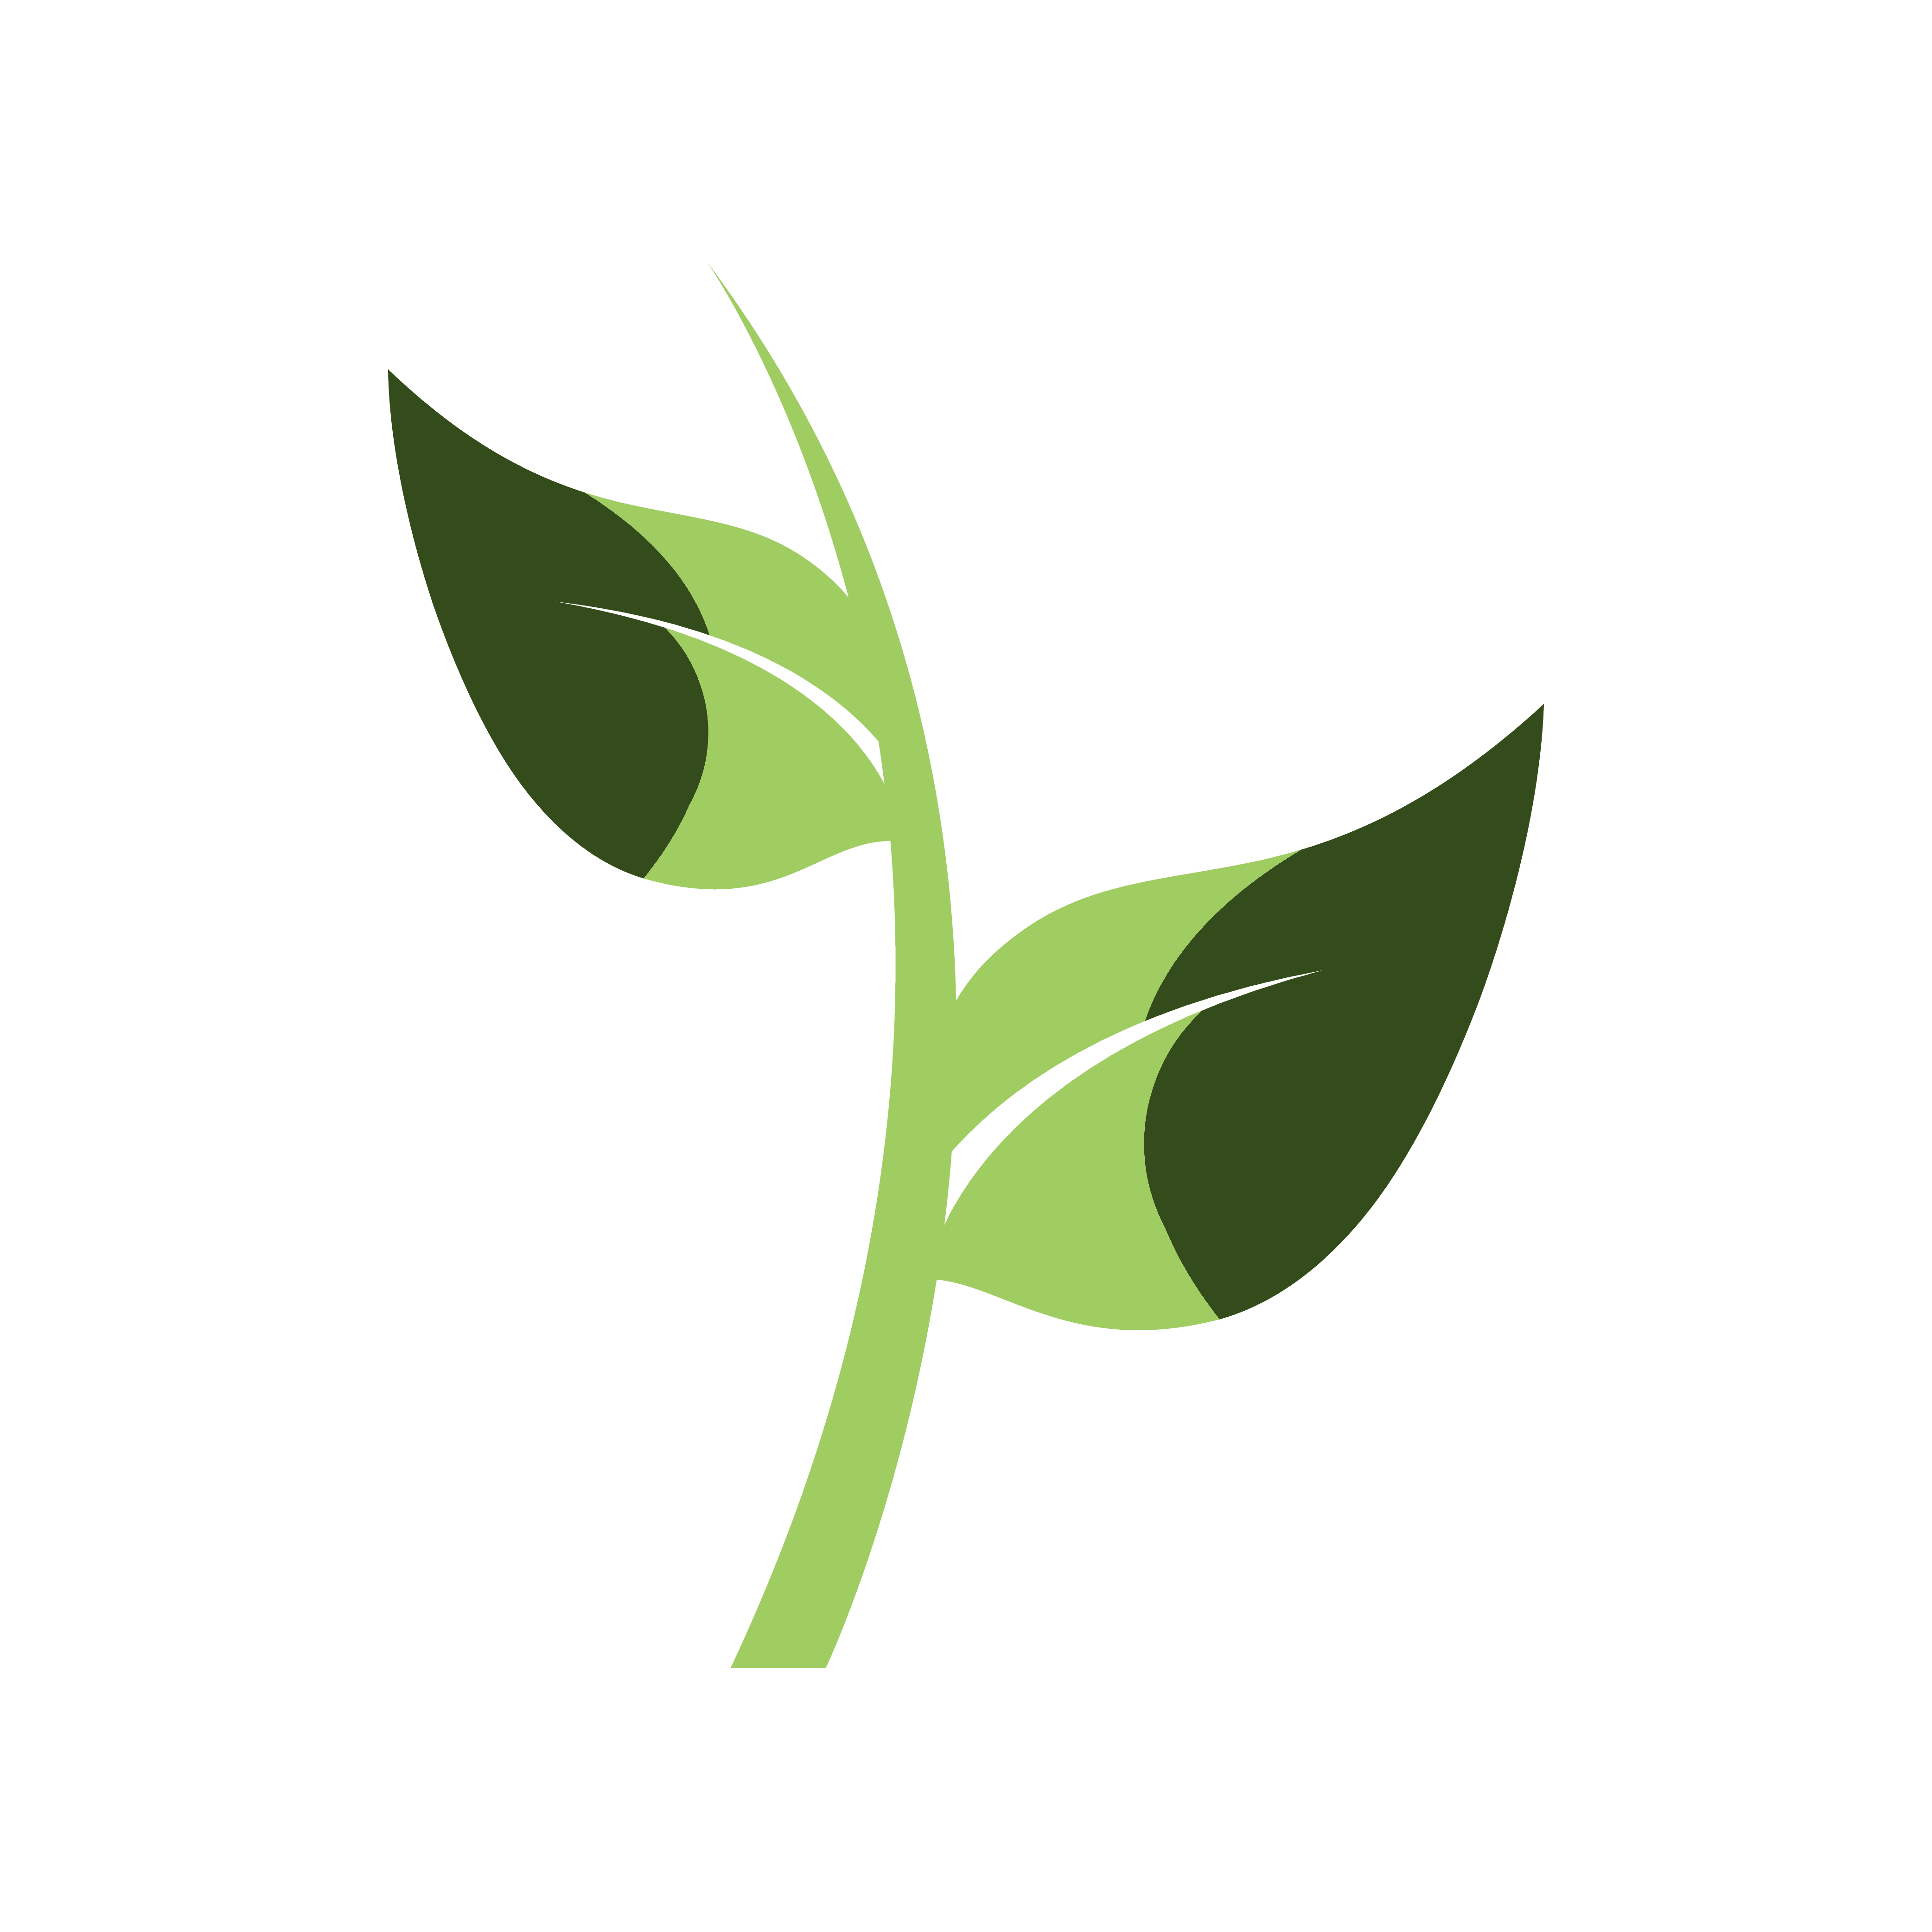 Mosher gardens leaf icon